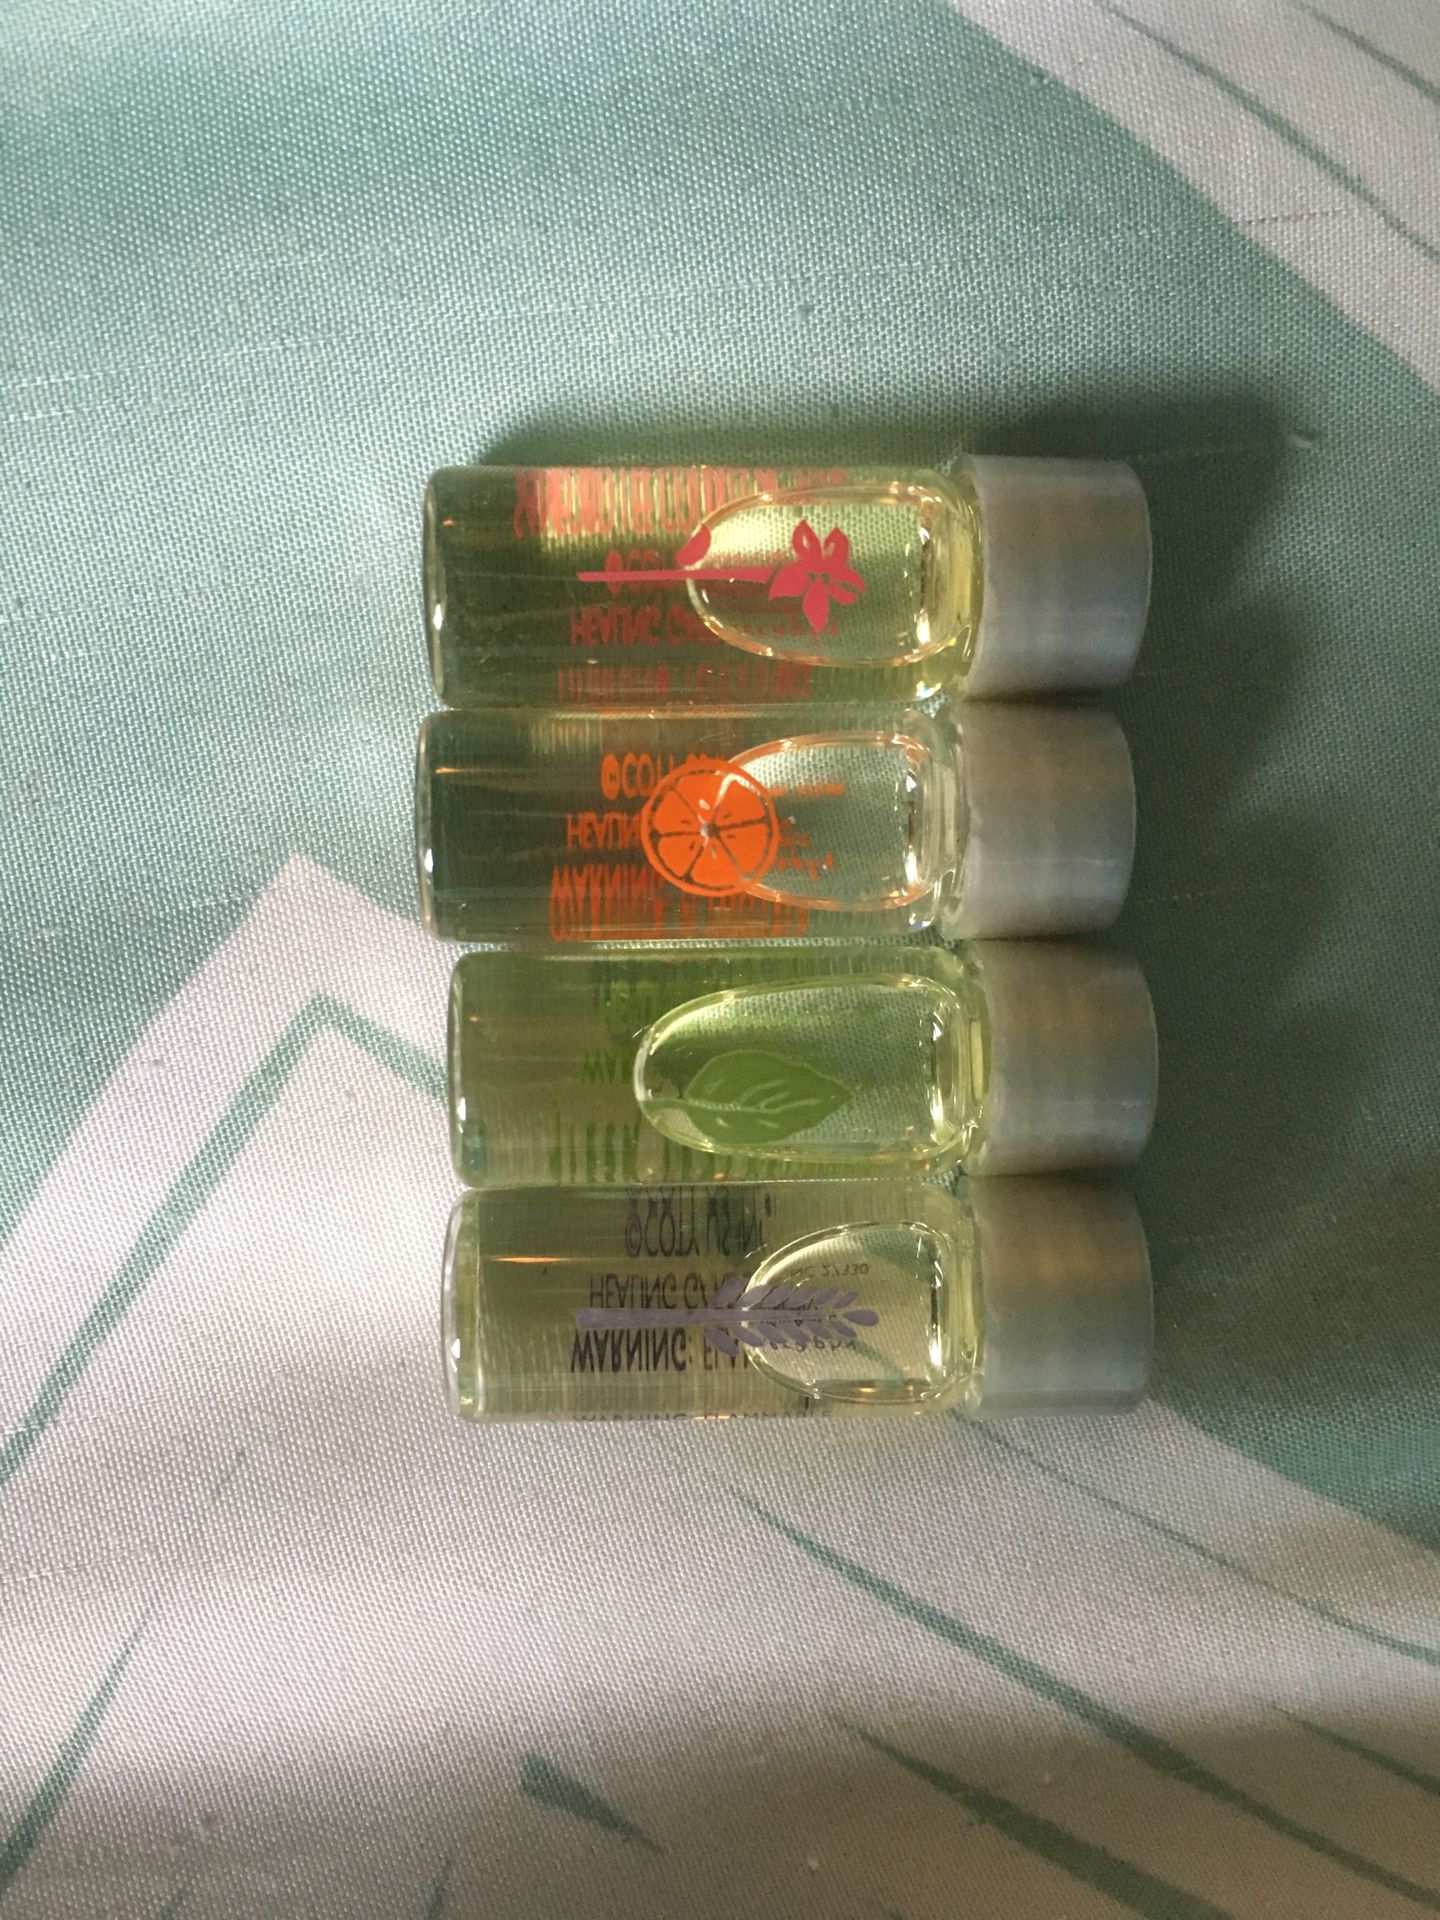 essential oils/perfumes